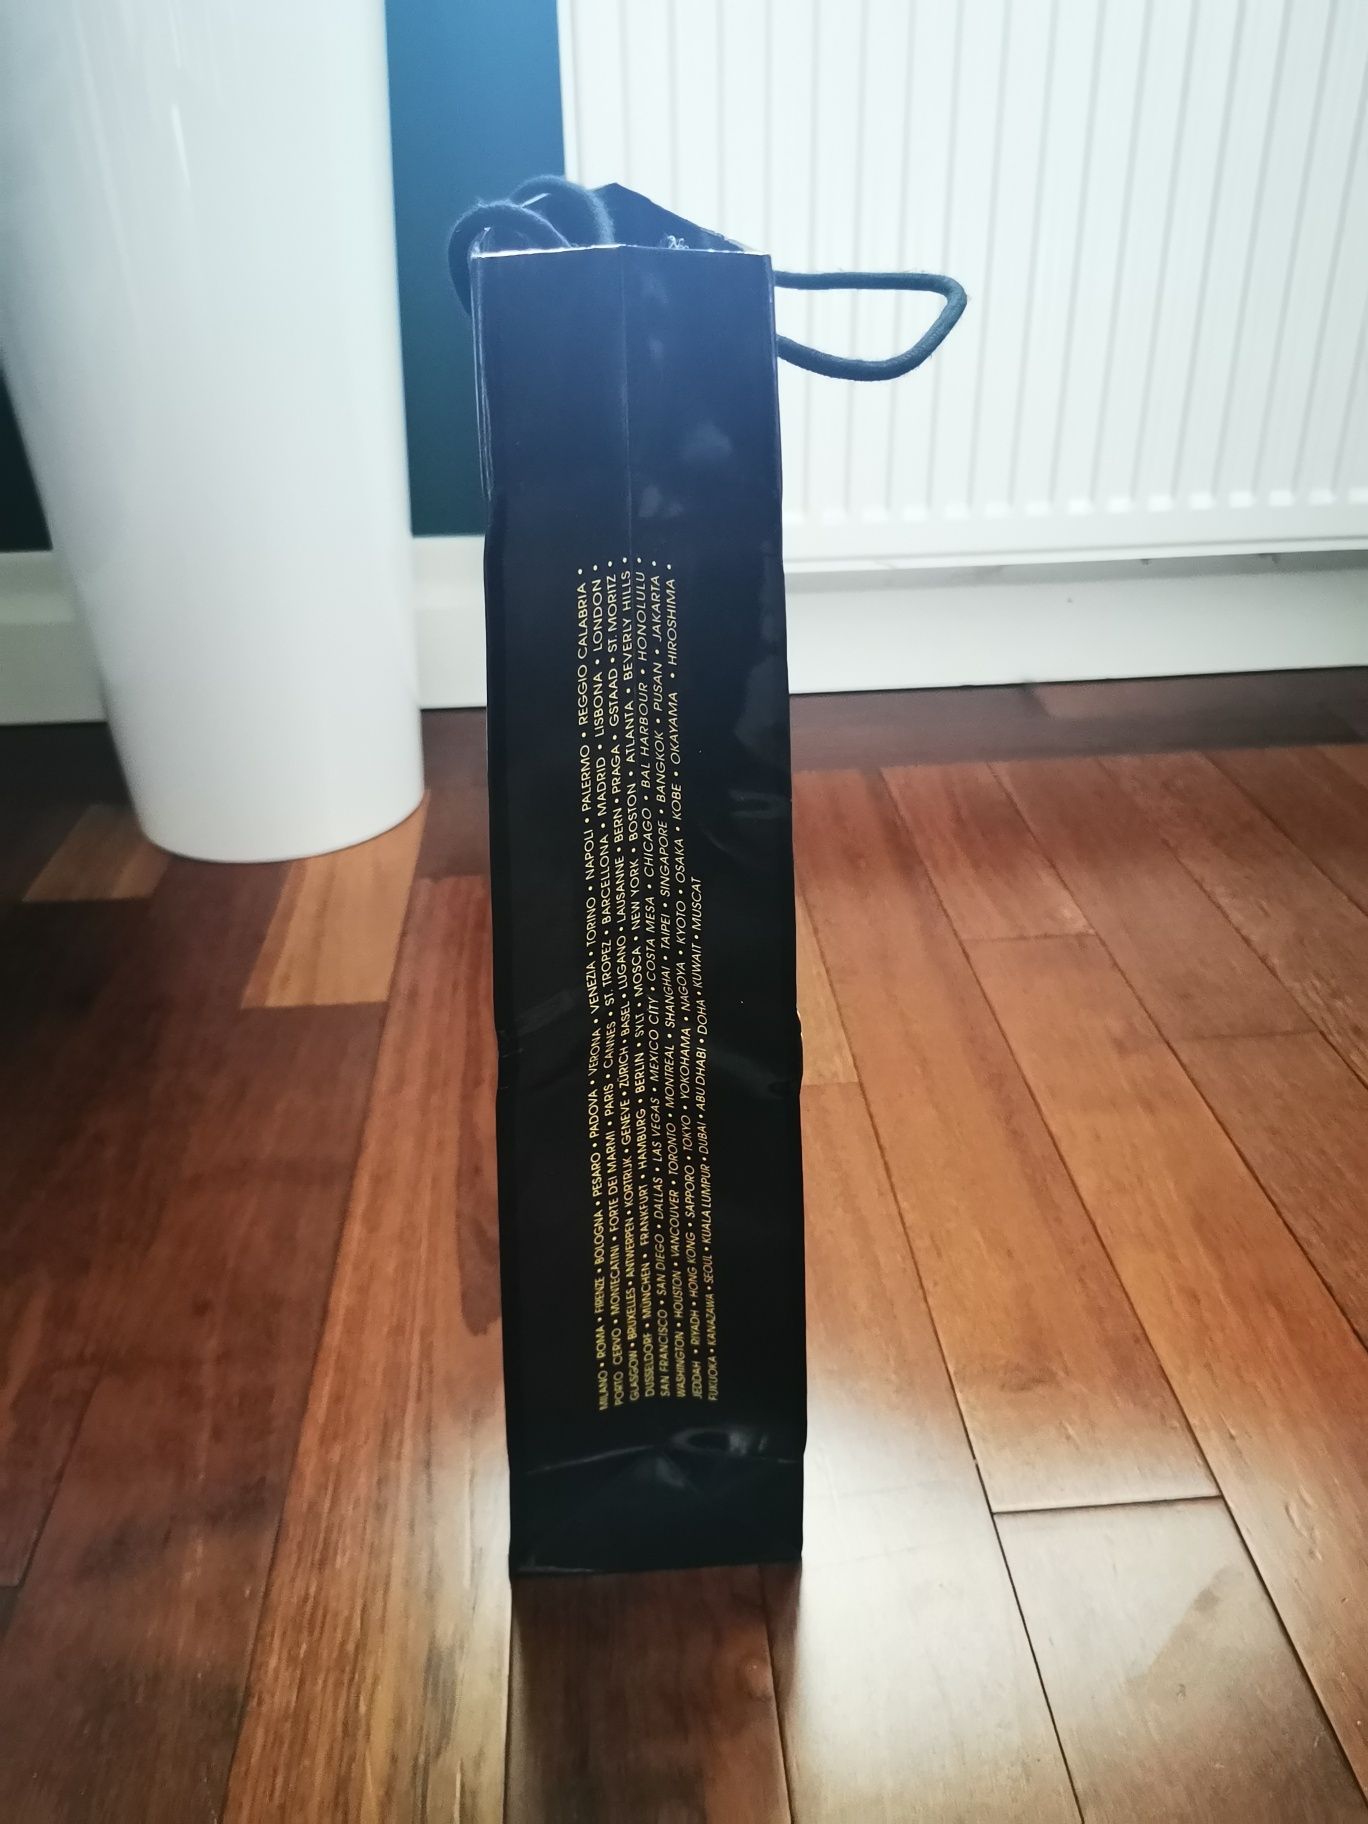 Gianni Versace oryginalna vintage torba torebka prezentowa